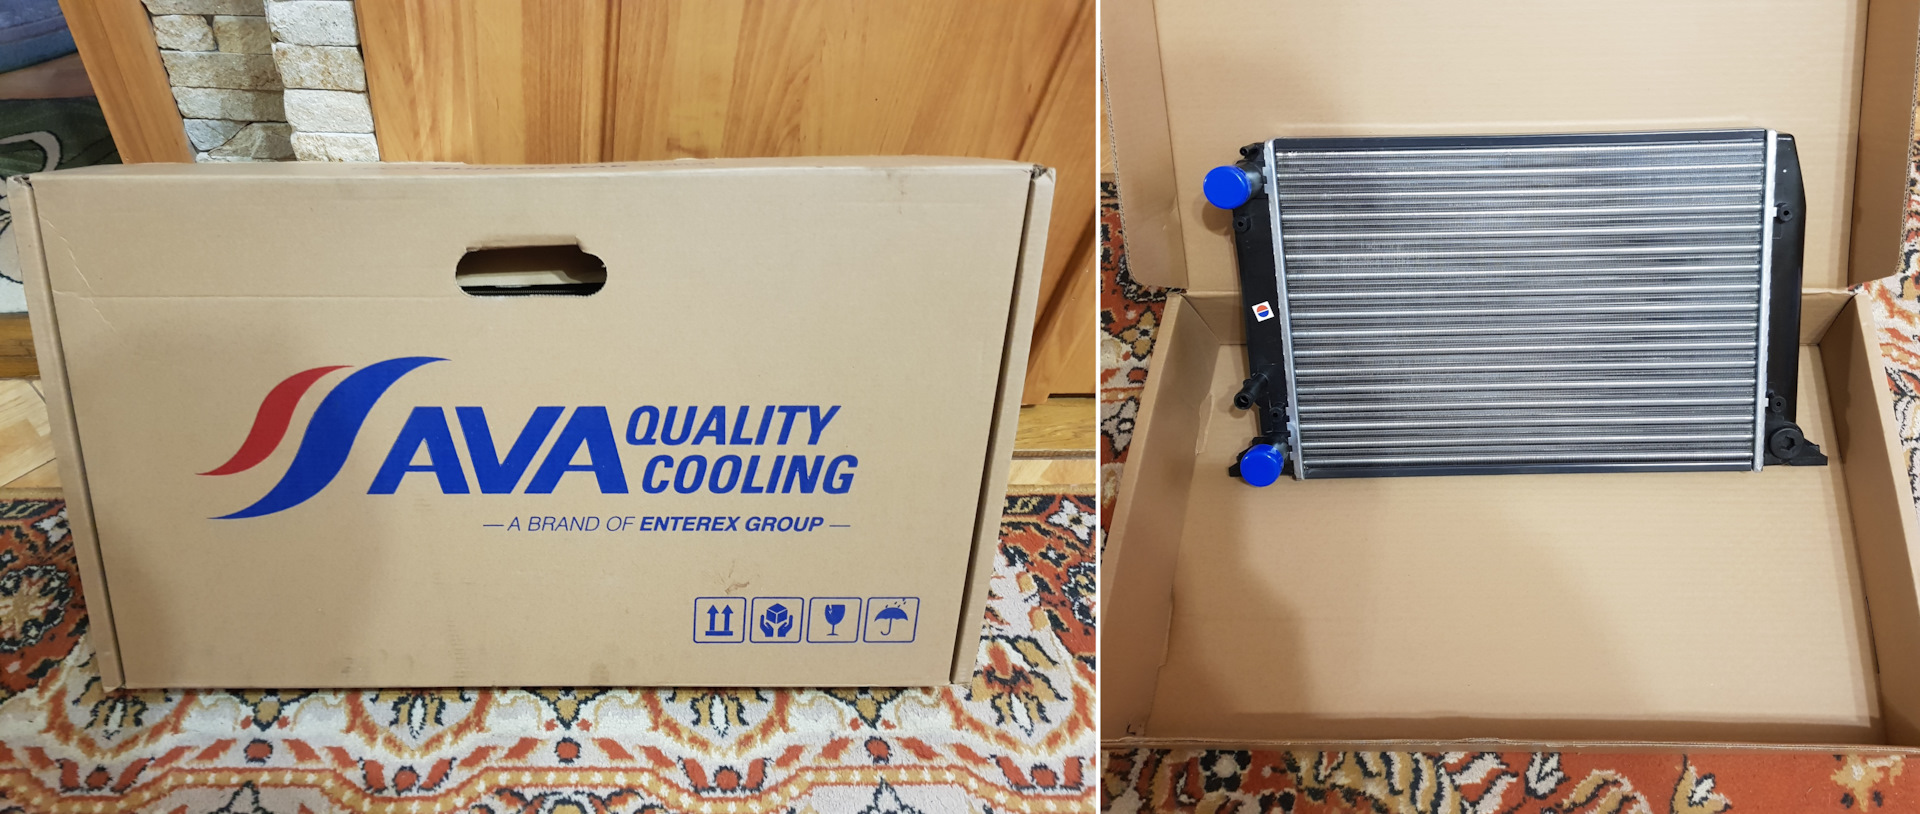 Ava quality. Ava quality Cooling. Ava quality Cooling fdak392. Ava quality Cooling logo. Интеркулер Lynx rt0025.